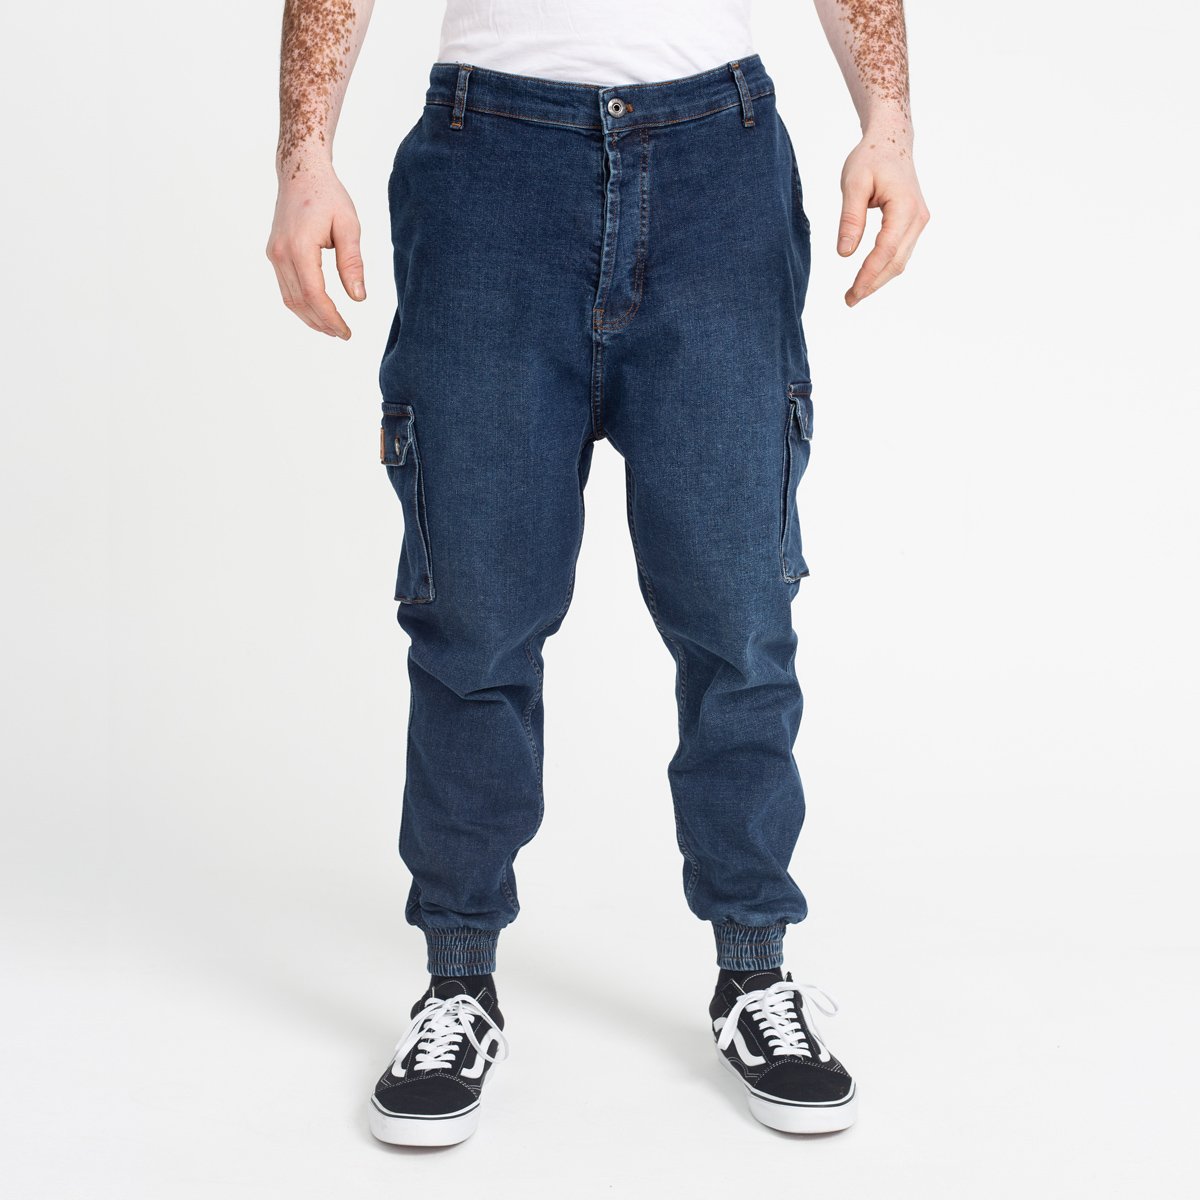 J Lo Wears Baggy Denim Cargo Pants With Oversize Pockets | POPSUGAR Fashion  UK